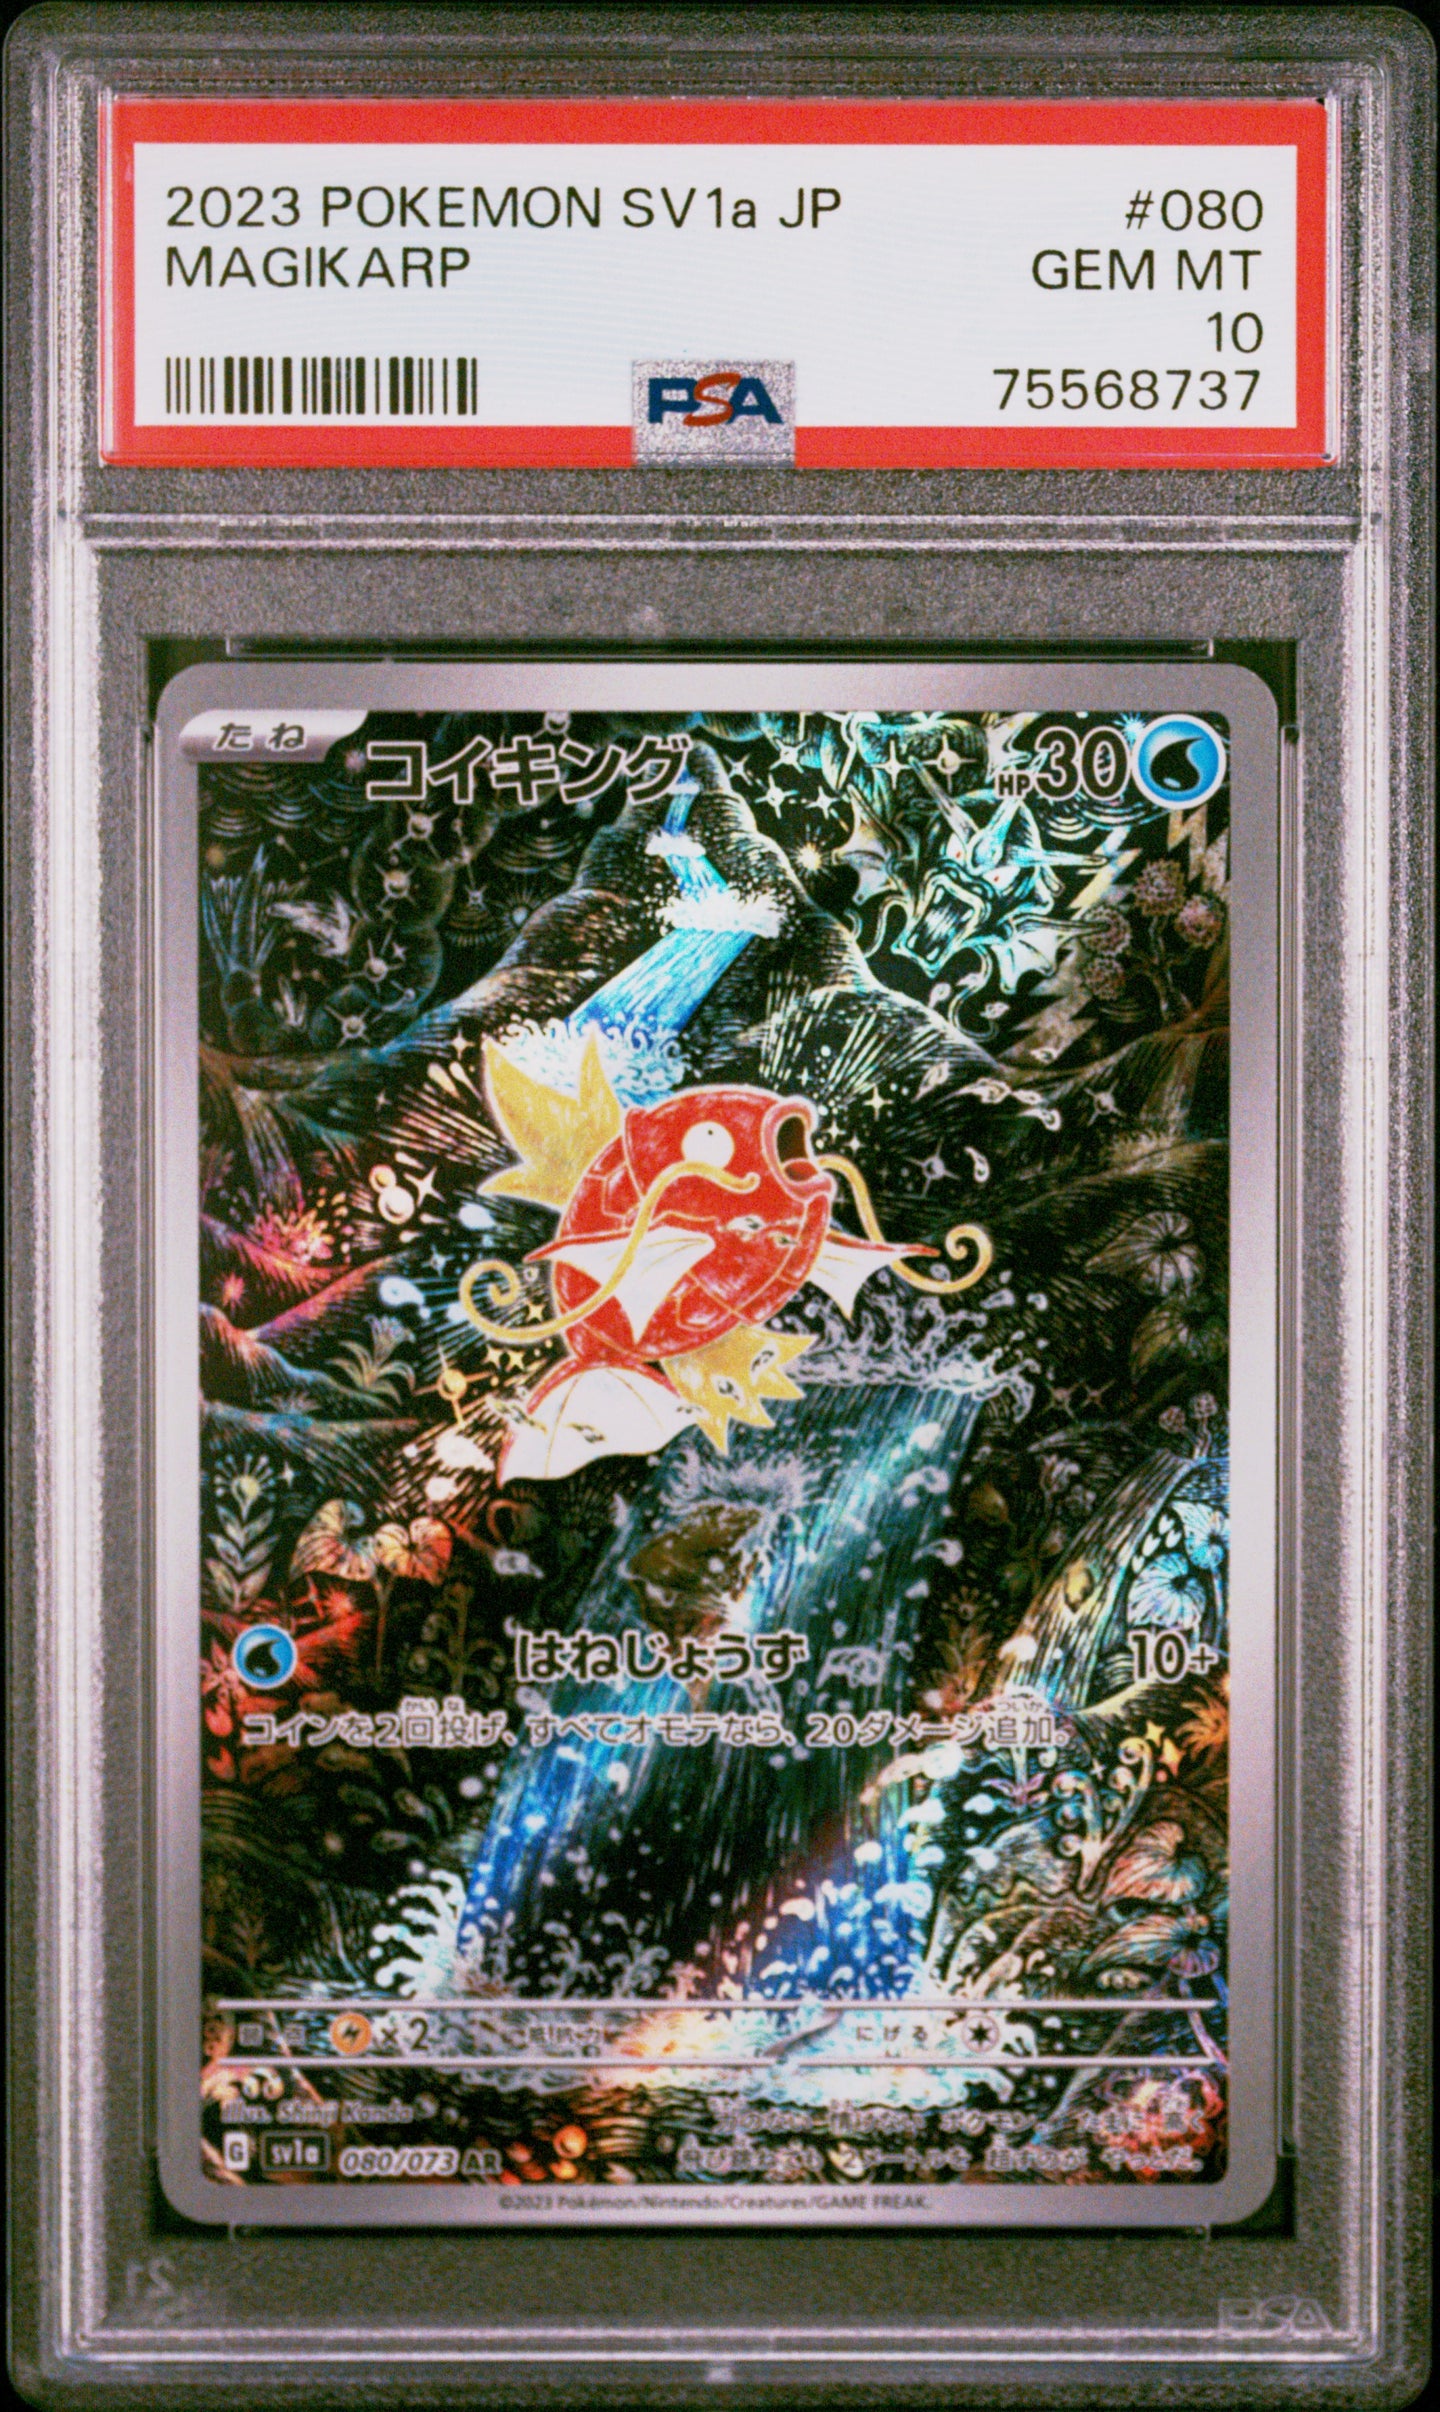 PSA 10 Japanese Magikarp Art Rare (Graded Card)